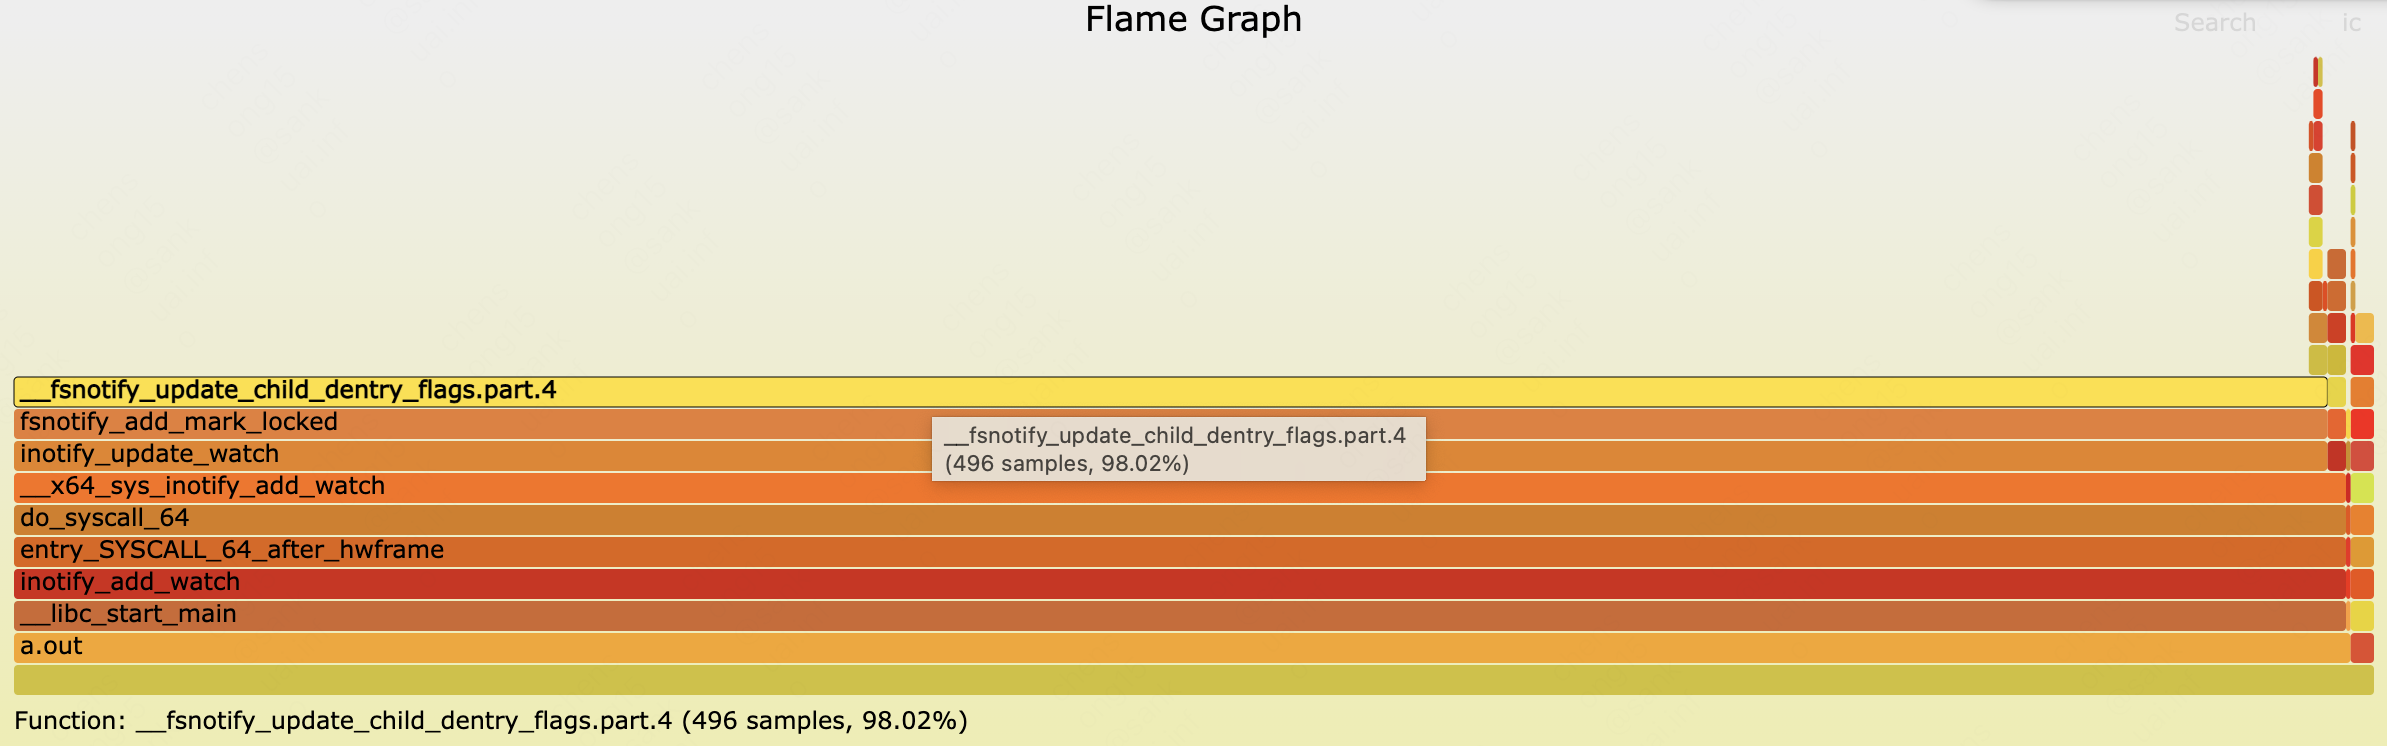 flame_graph